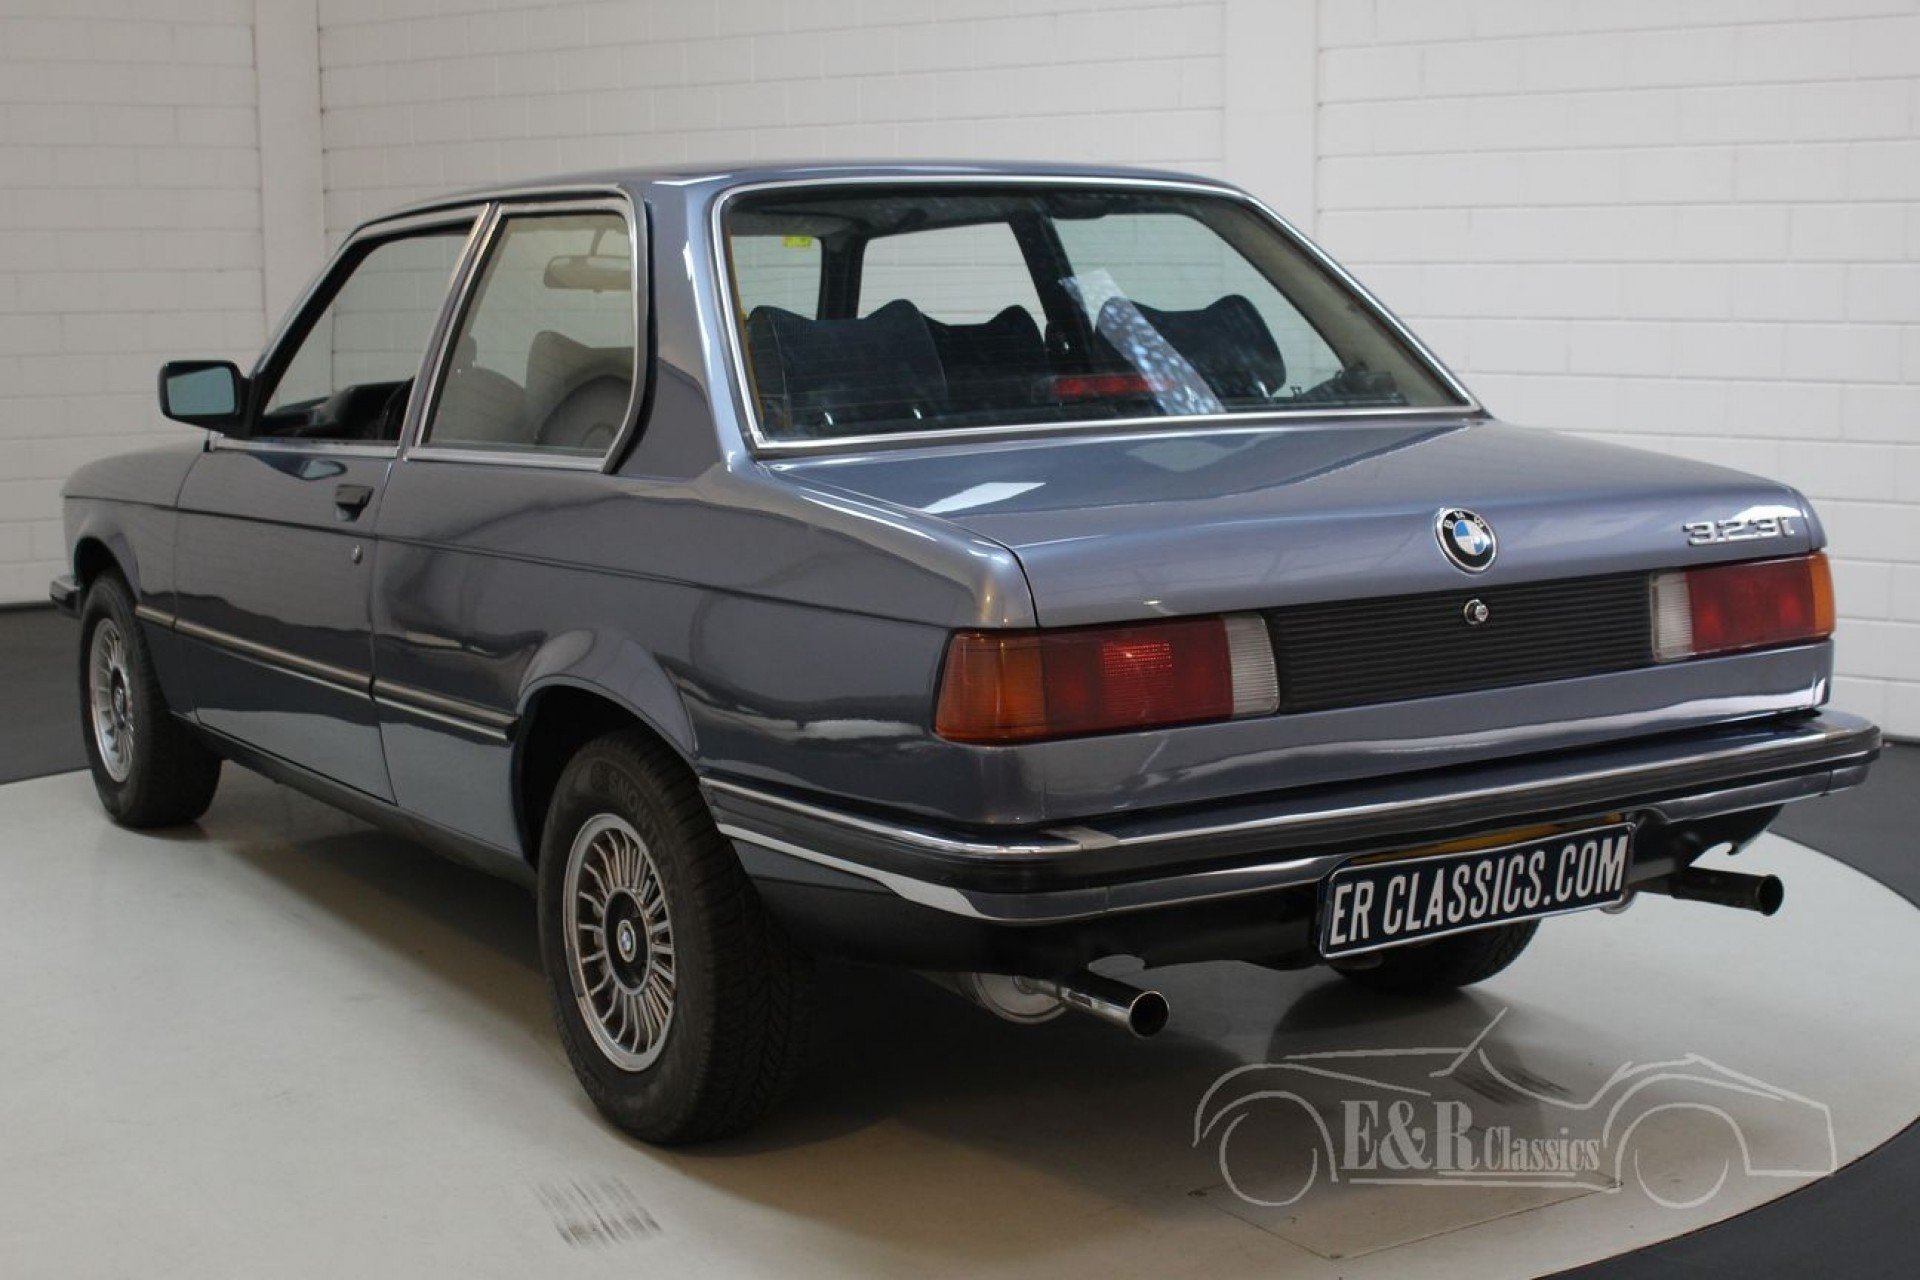 BMW E21 323i 1980 for sale at ERclassics